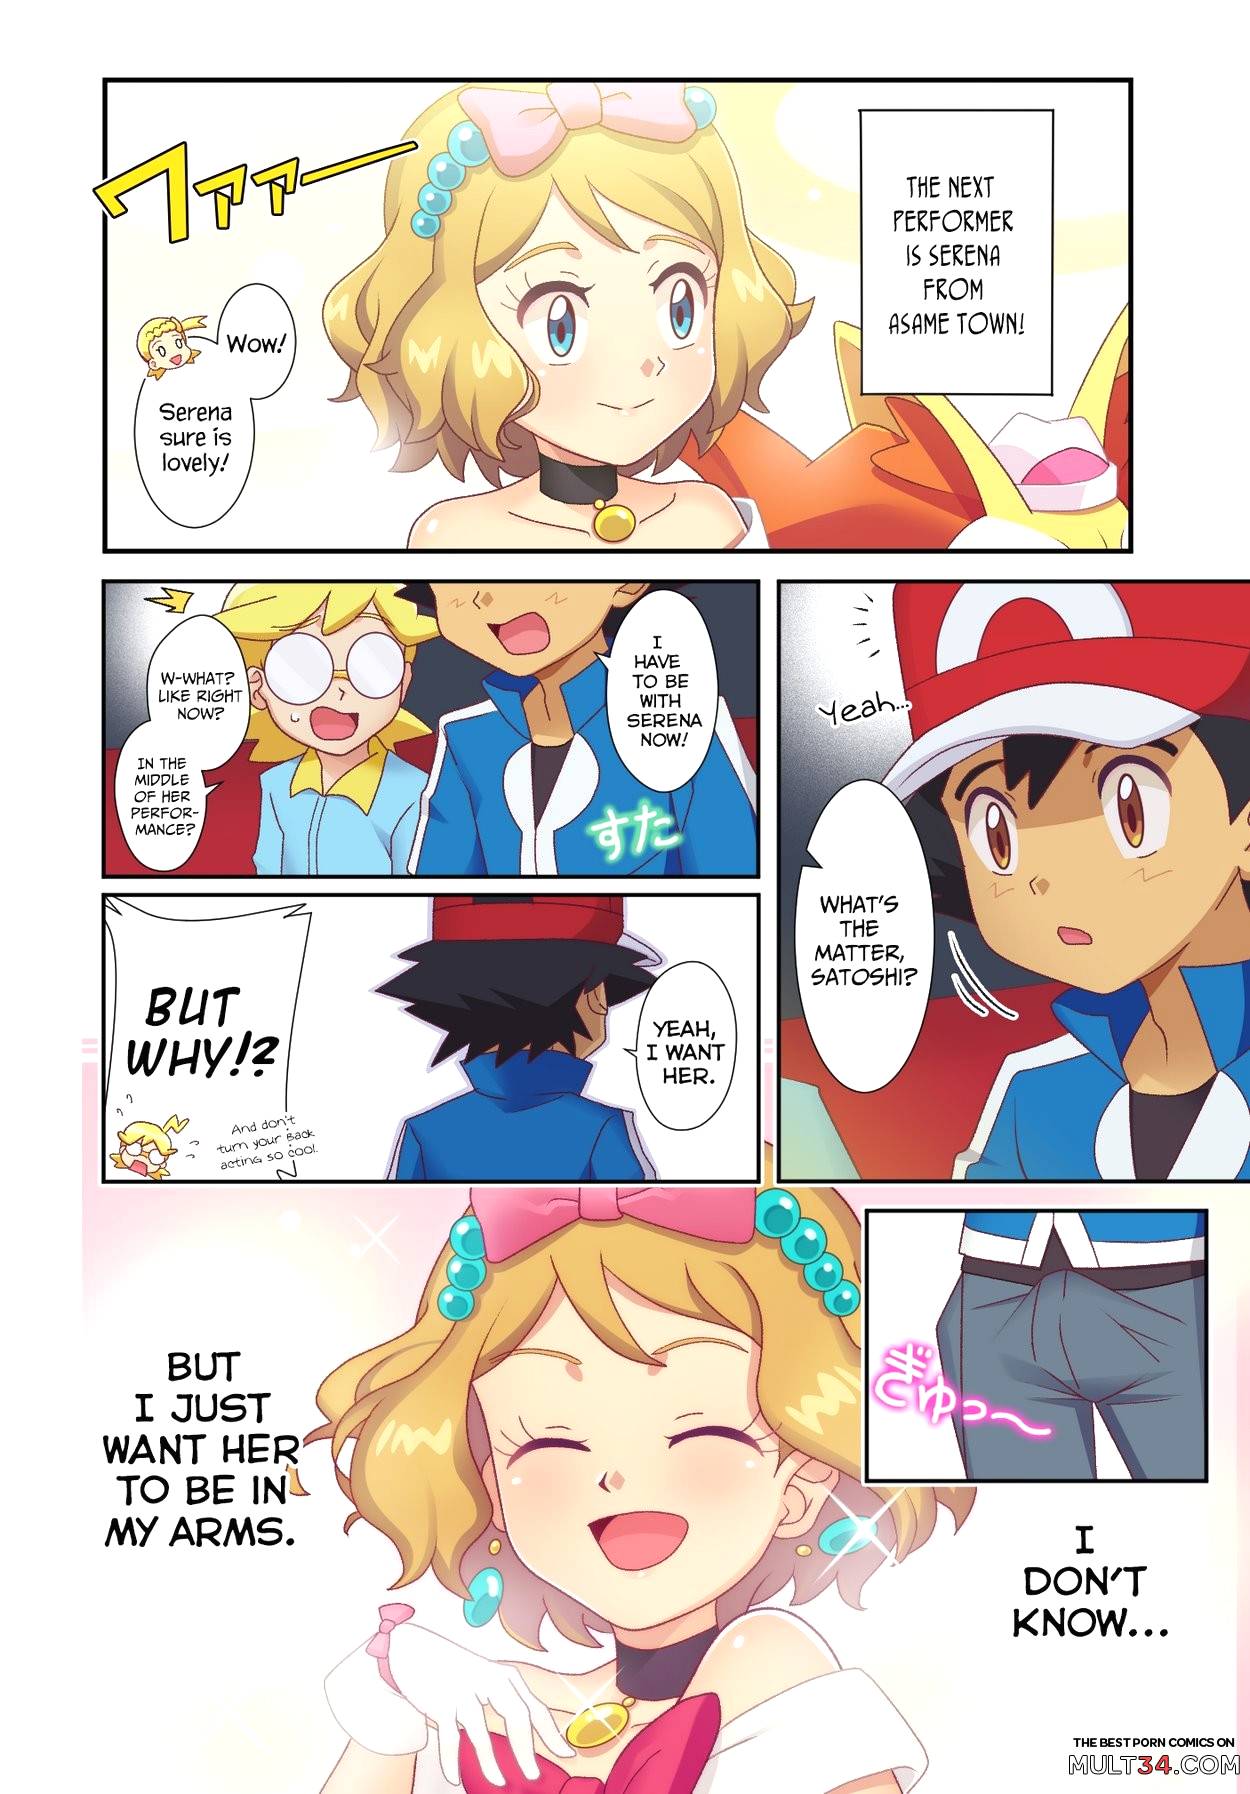 Serena pokemon porn comic